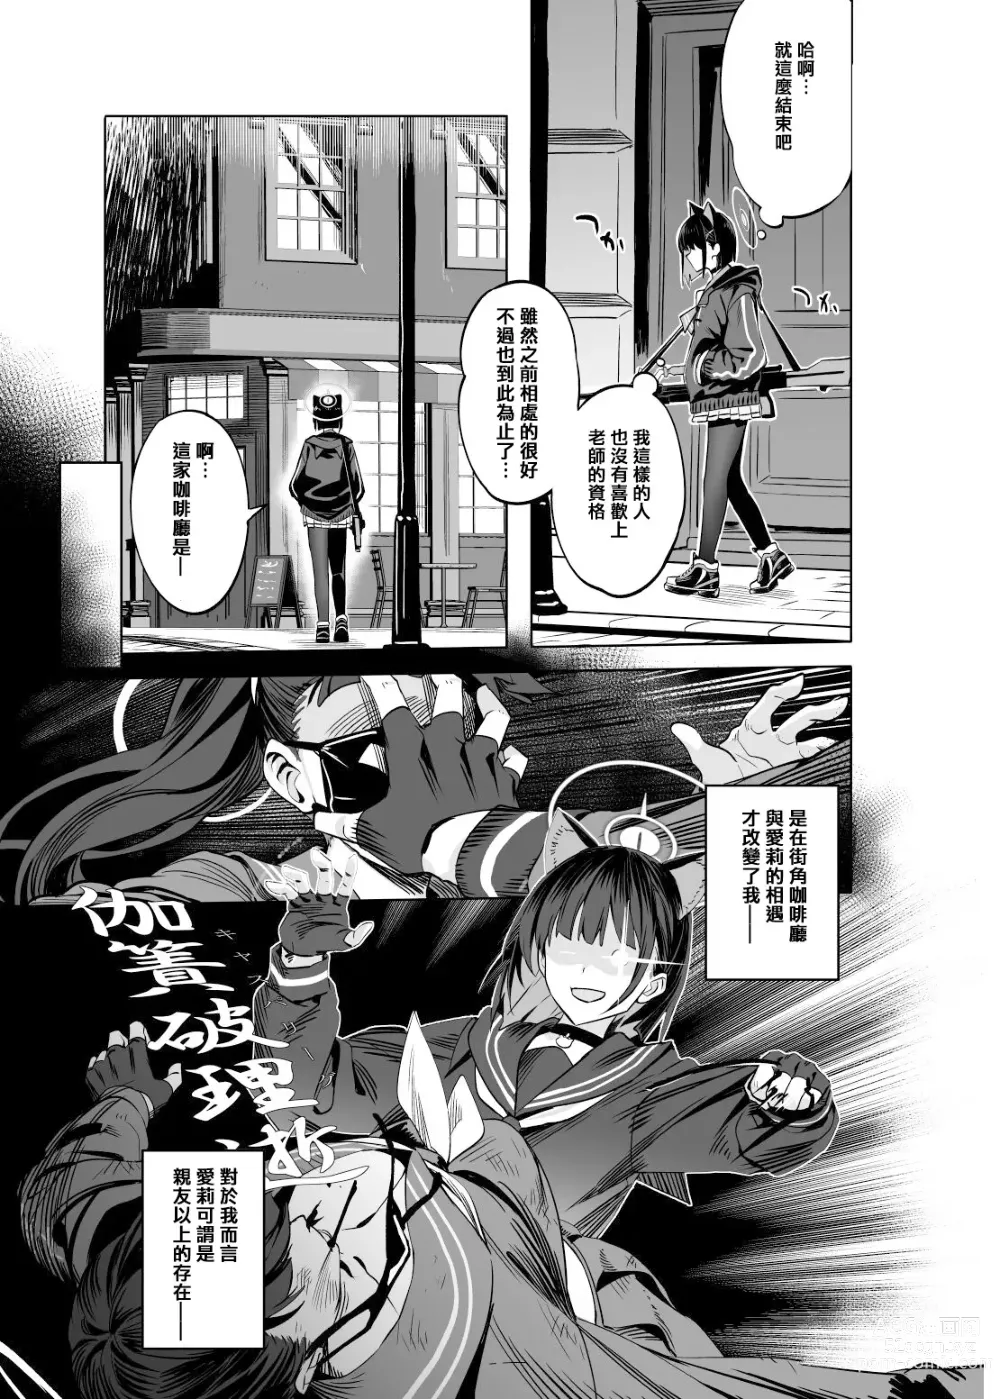 Page 21 of doujinshi Kyouyama Kazusa no Torisetsu - Tetourner le Chat dans la casserole